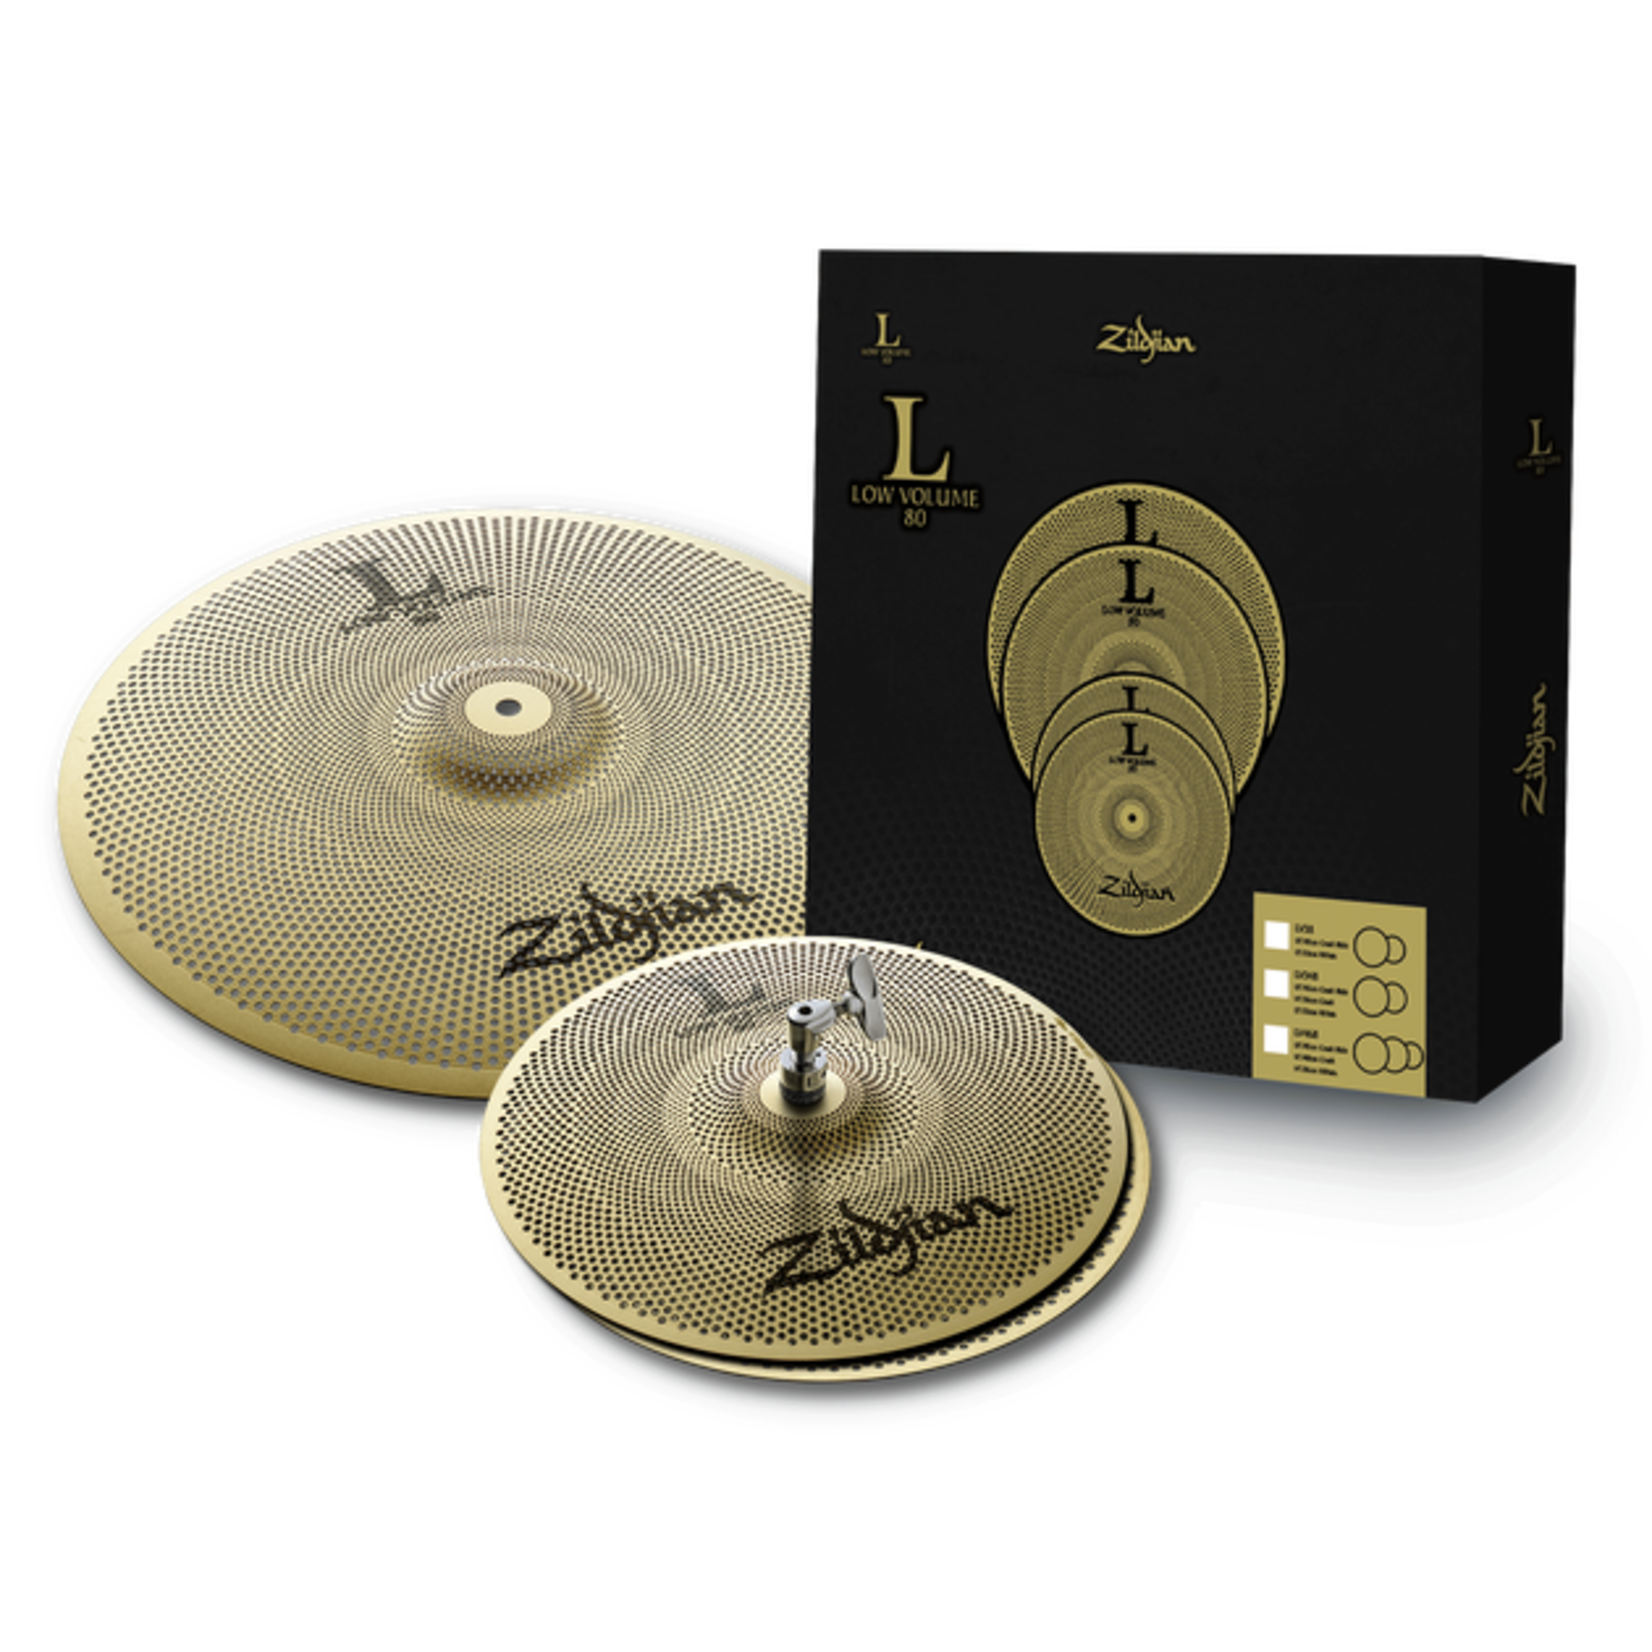 Zildjian Zildjian L80 Low Volume Cymbal Pack 13/18 LV38